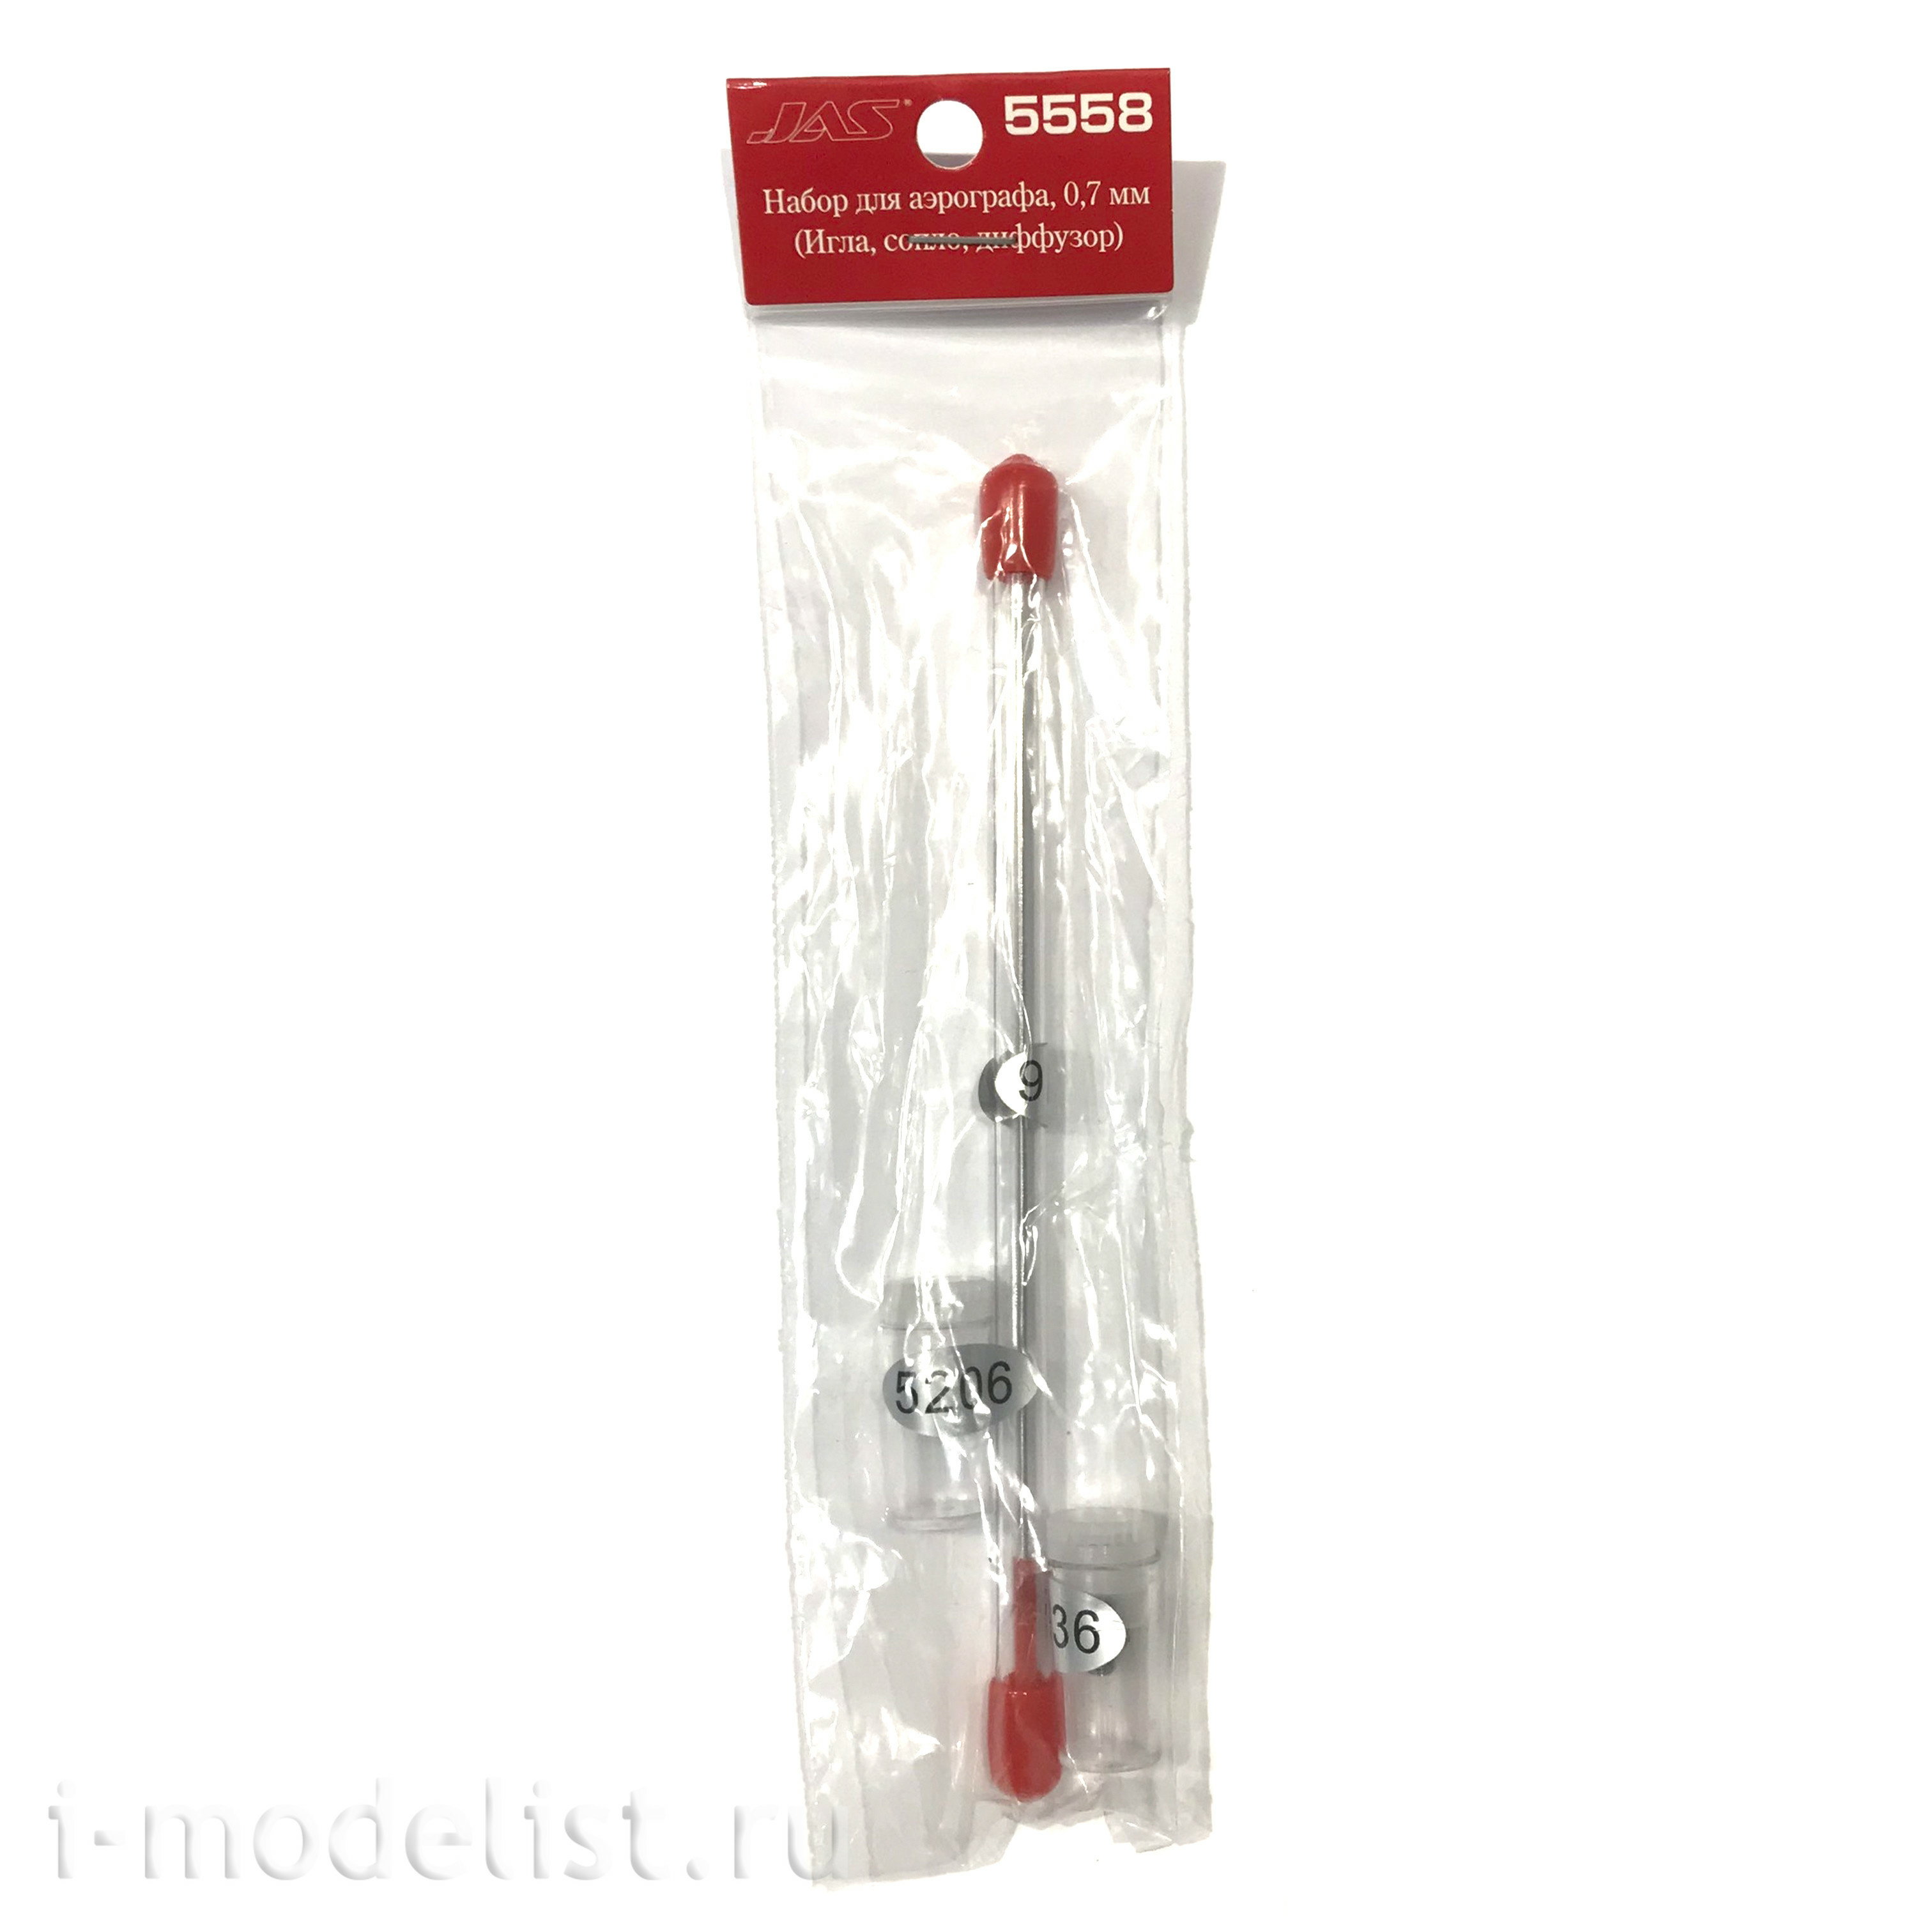 5558 JAS Airbrush Kit 0.7mm (Needle, Nozzle, Diffuser)